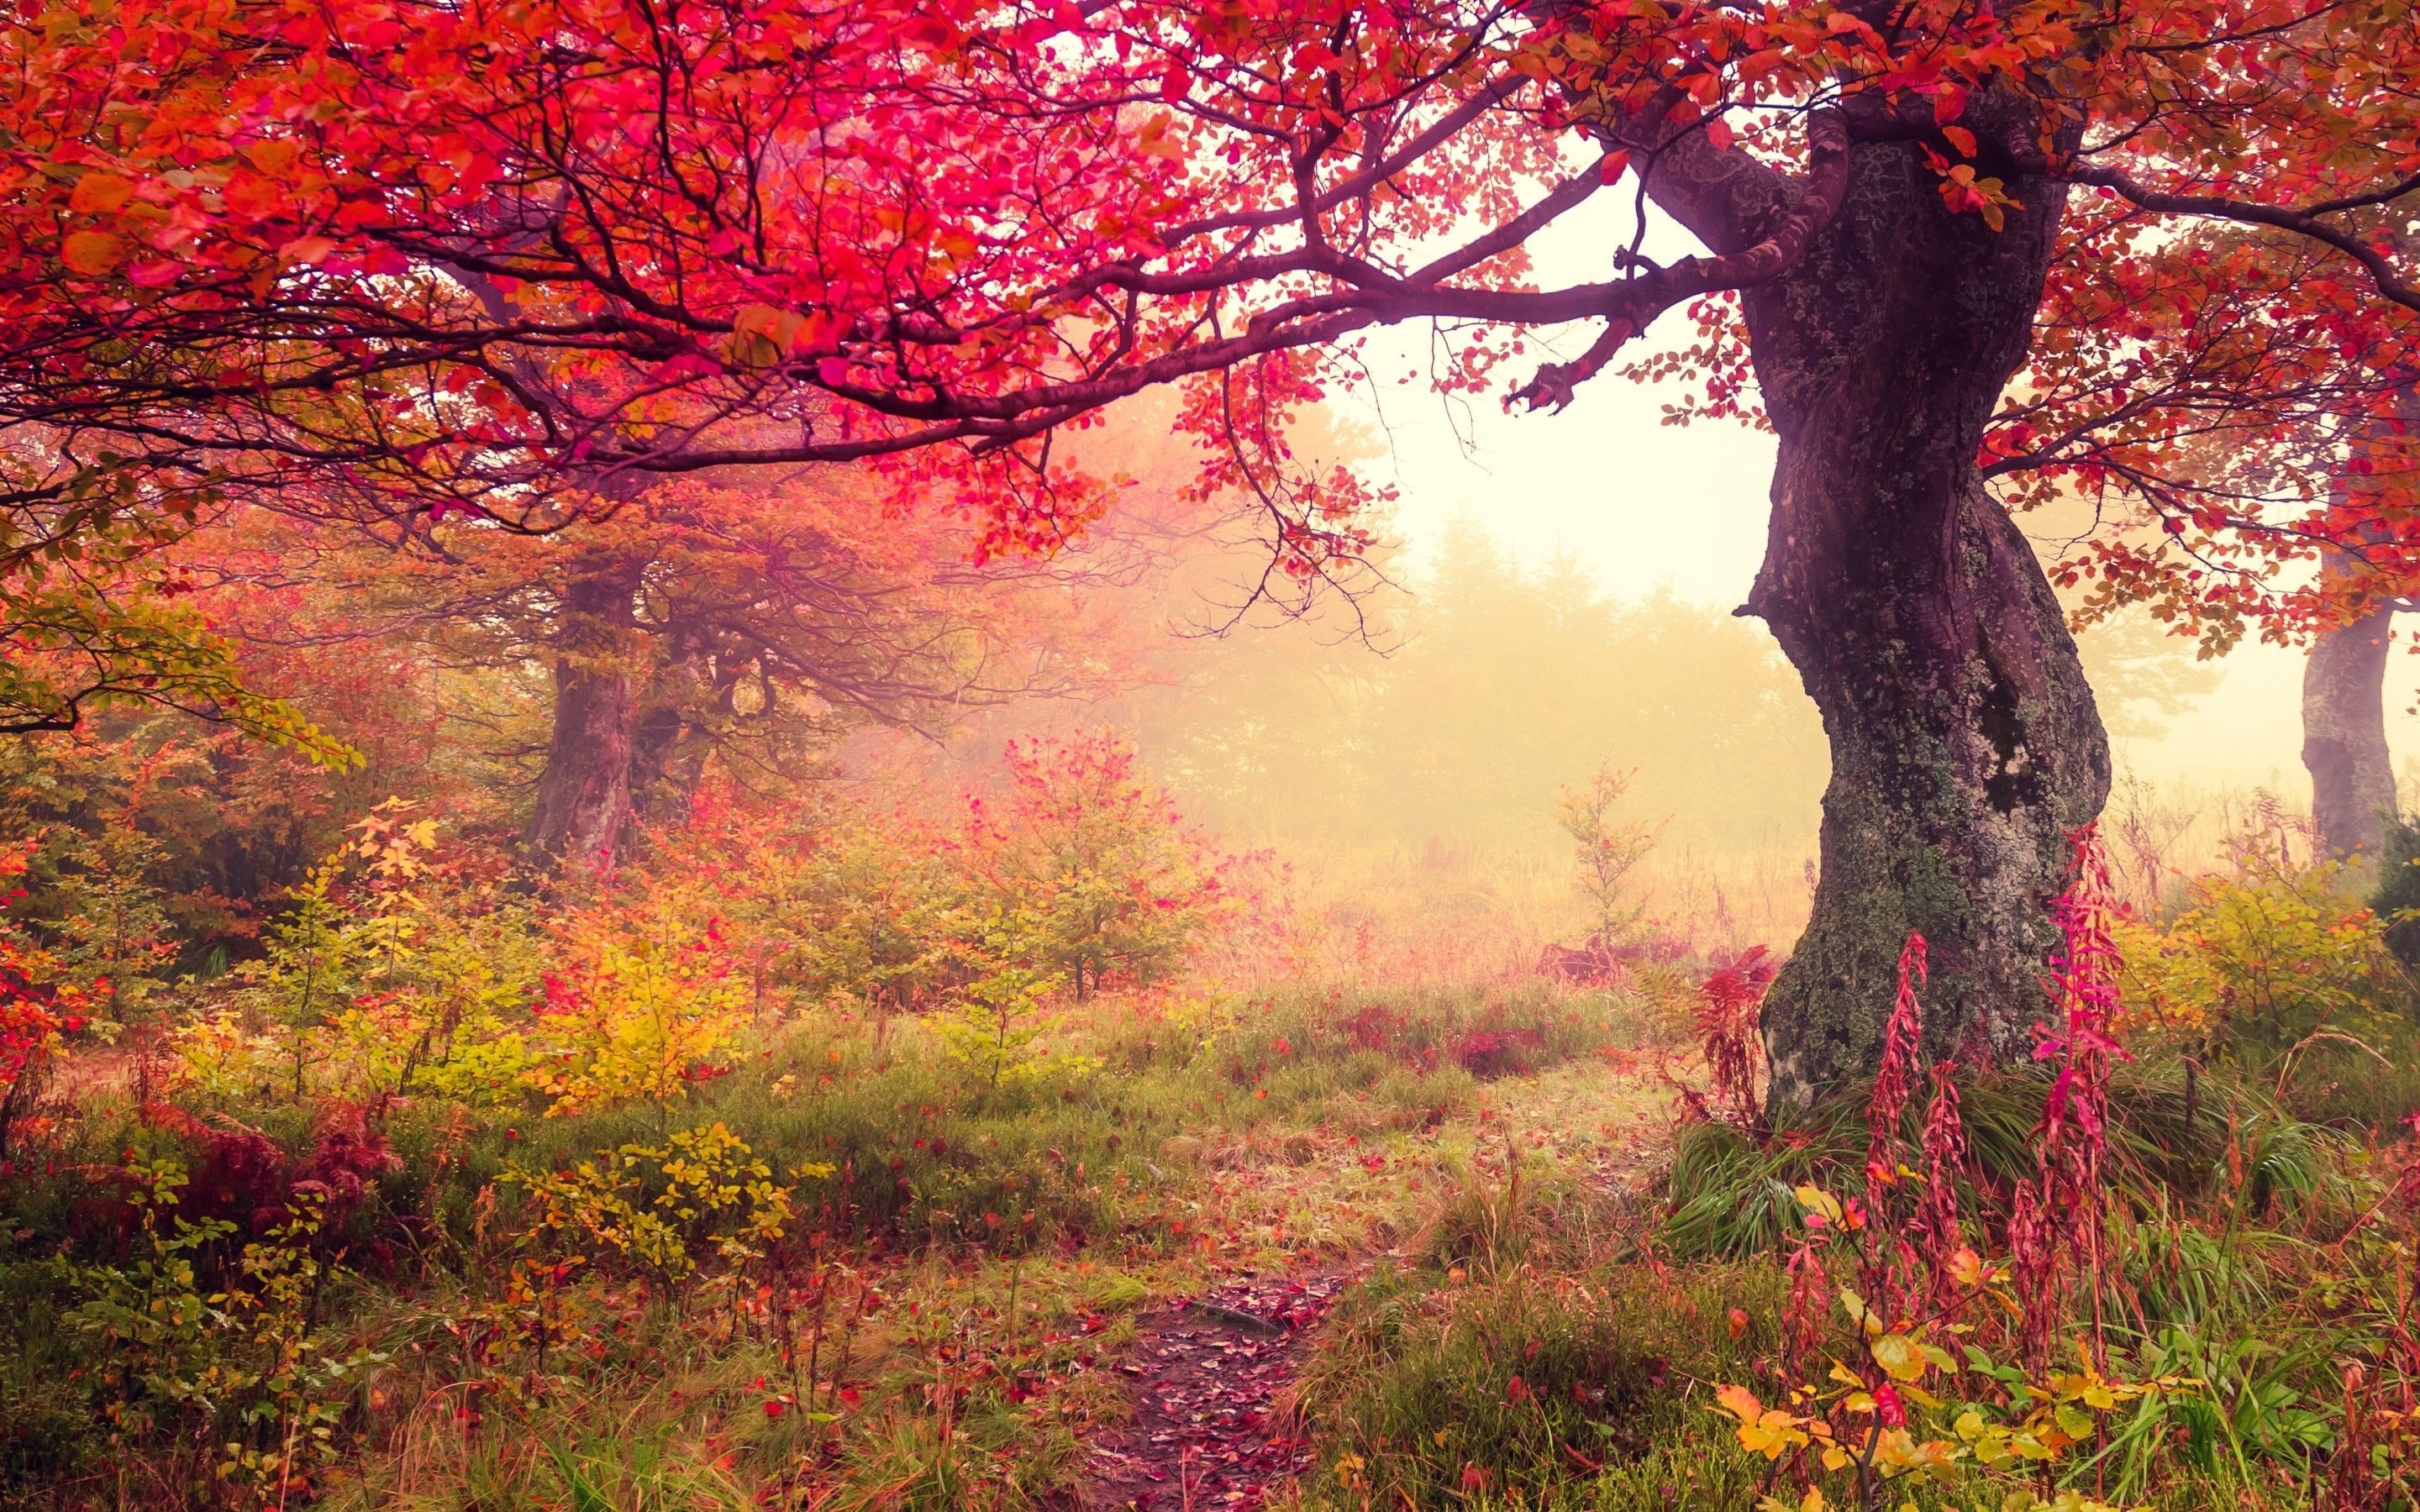 Desktop Image of Autumn Forest. Autumn Forest Wallpaper